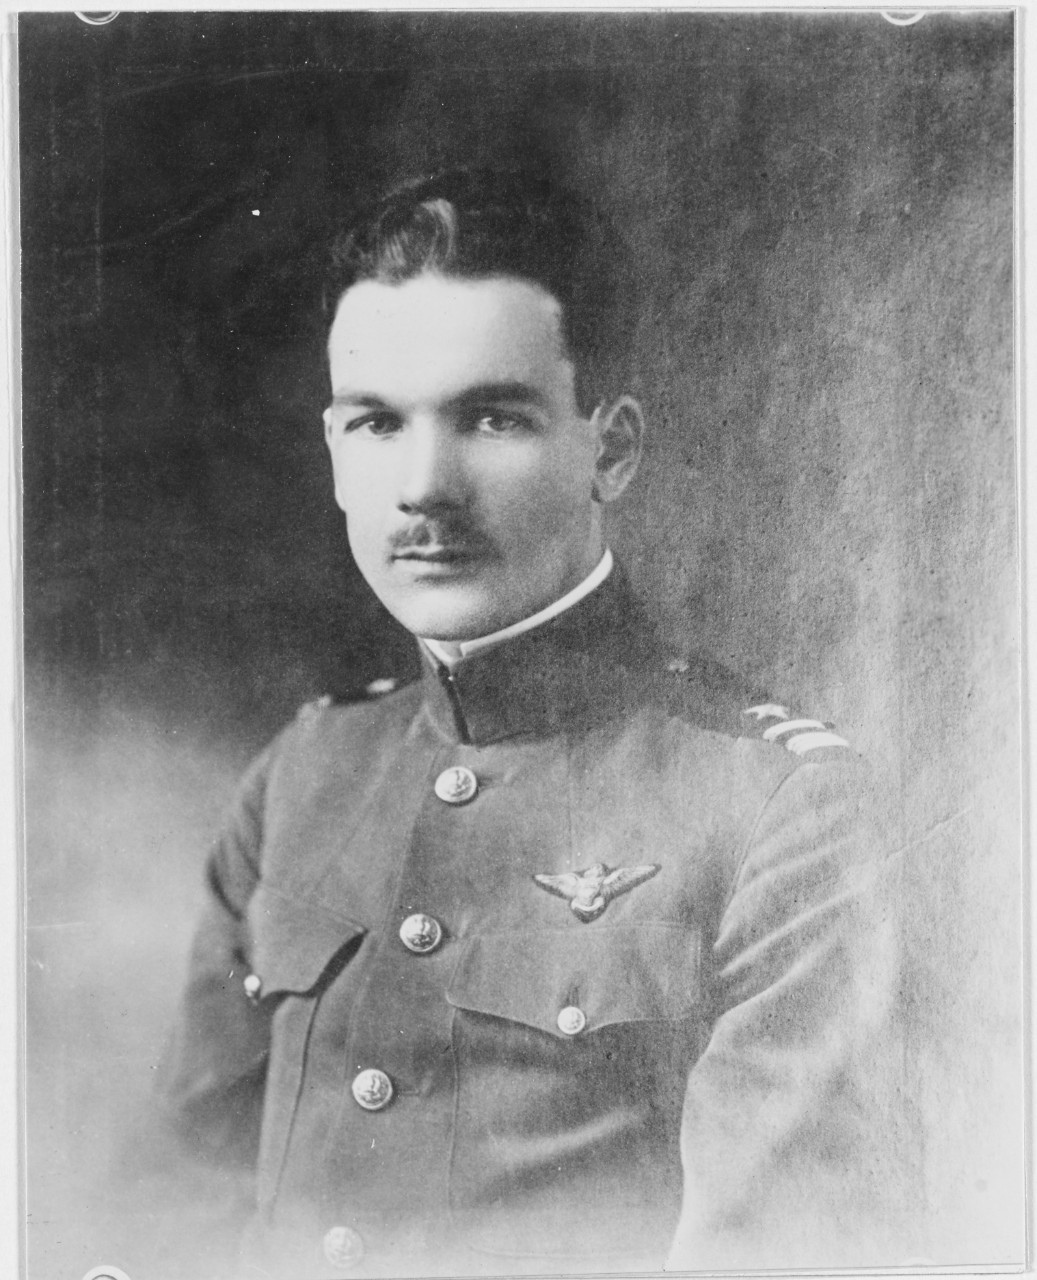 Lieutenant Junior Grade George W. Shaw, USN Reserve Force